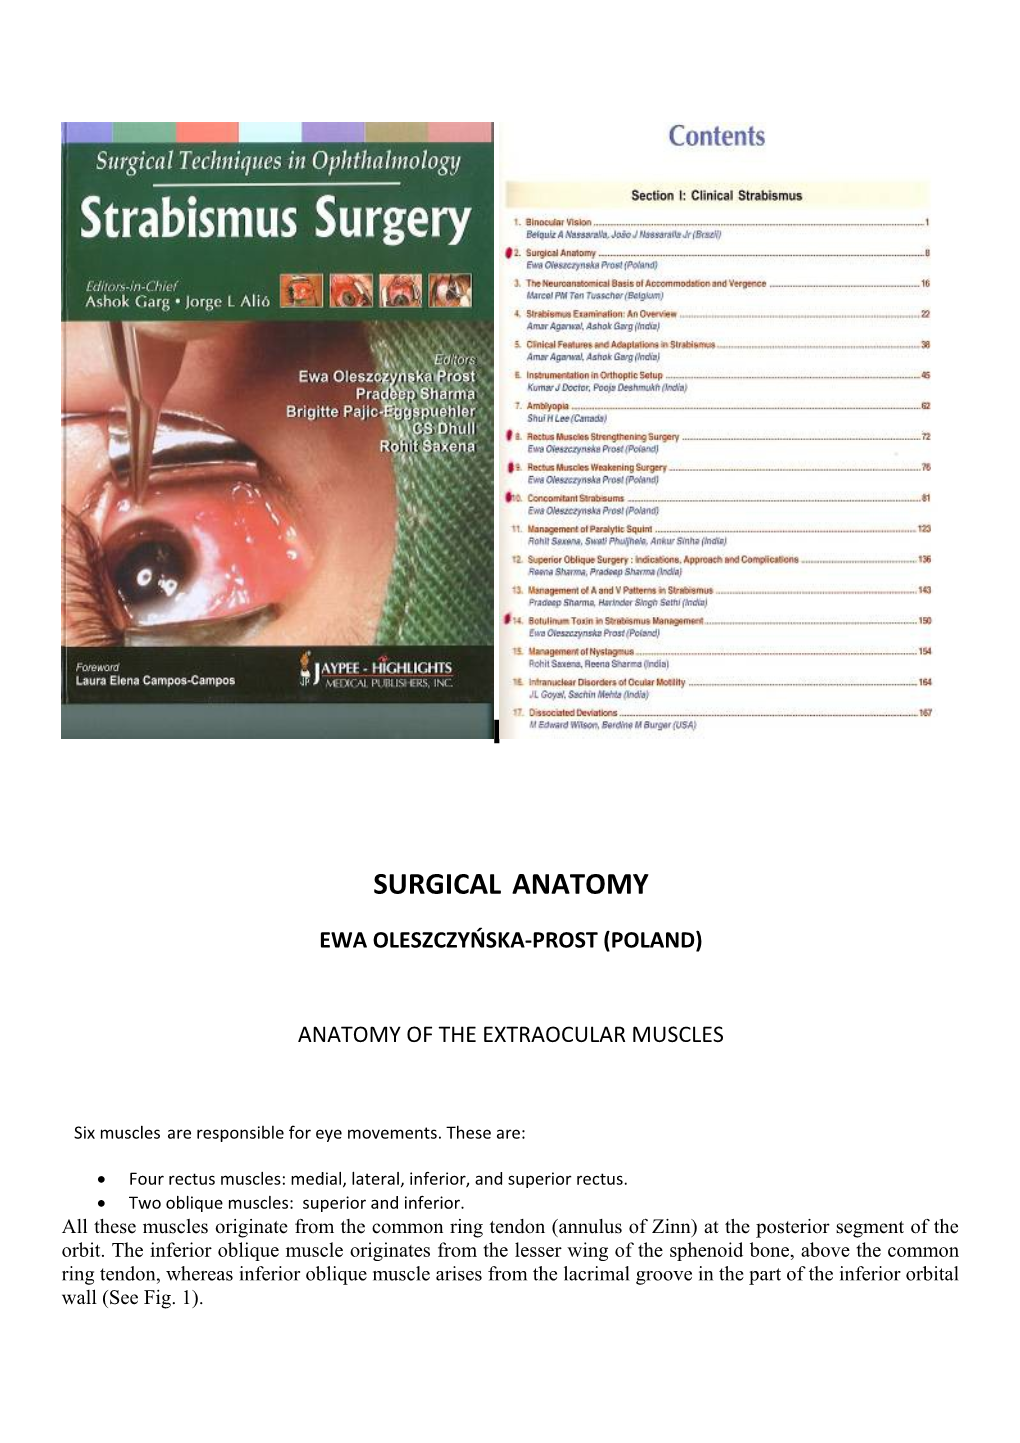 Surgical Anatomy s1